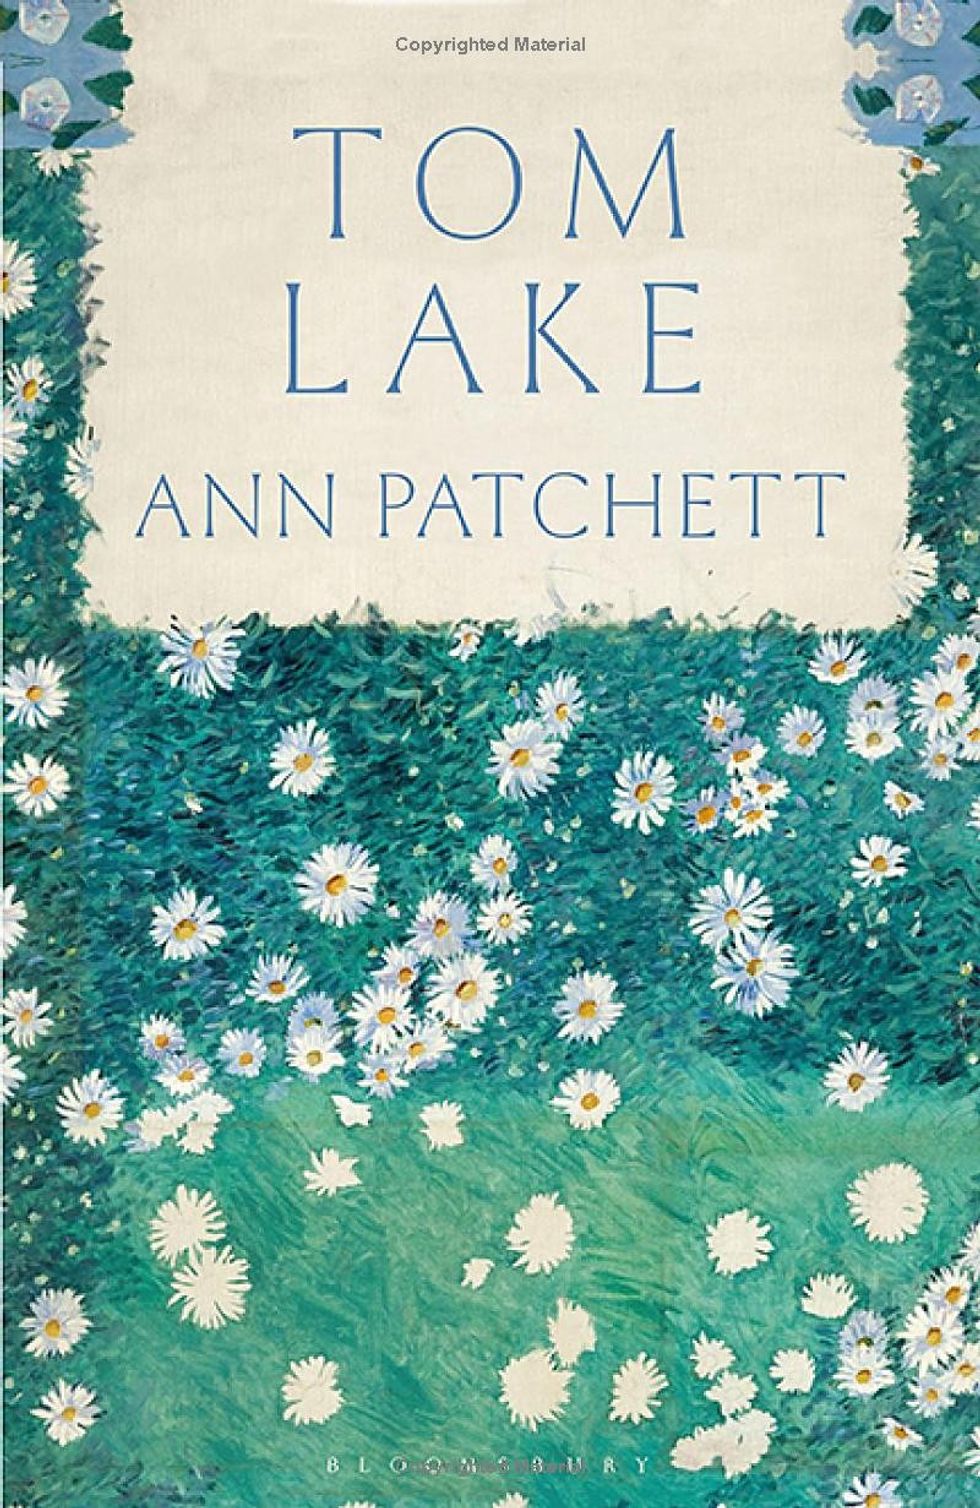 "Tom Lake" by Ann Patchett